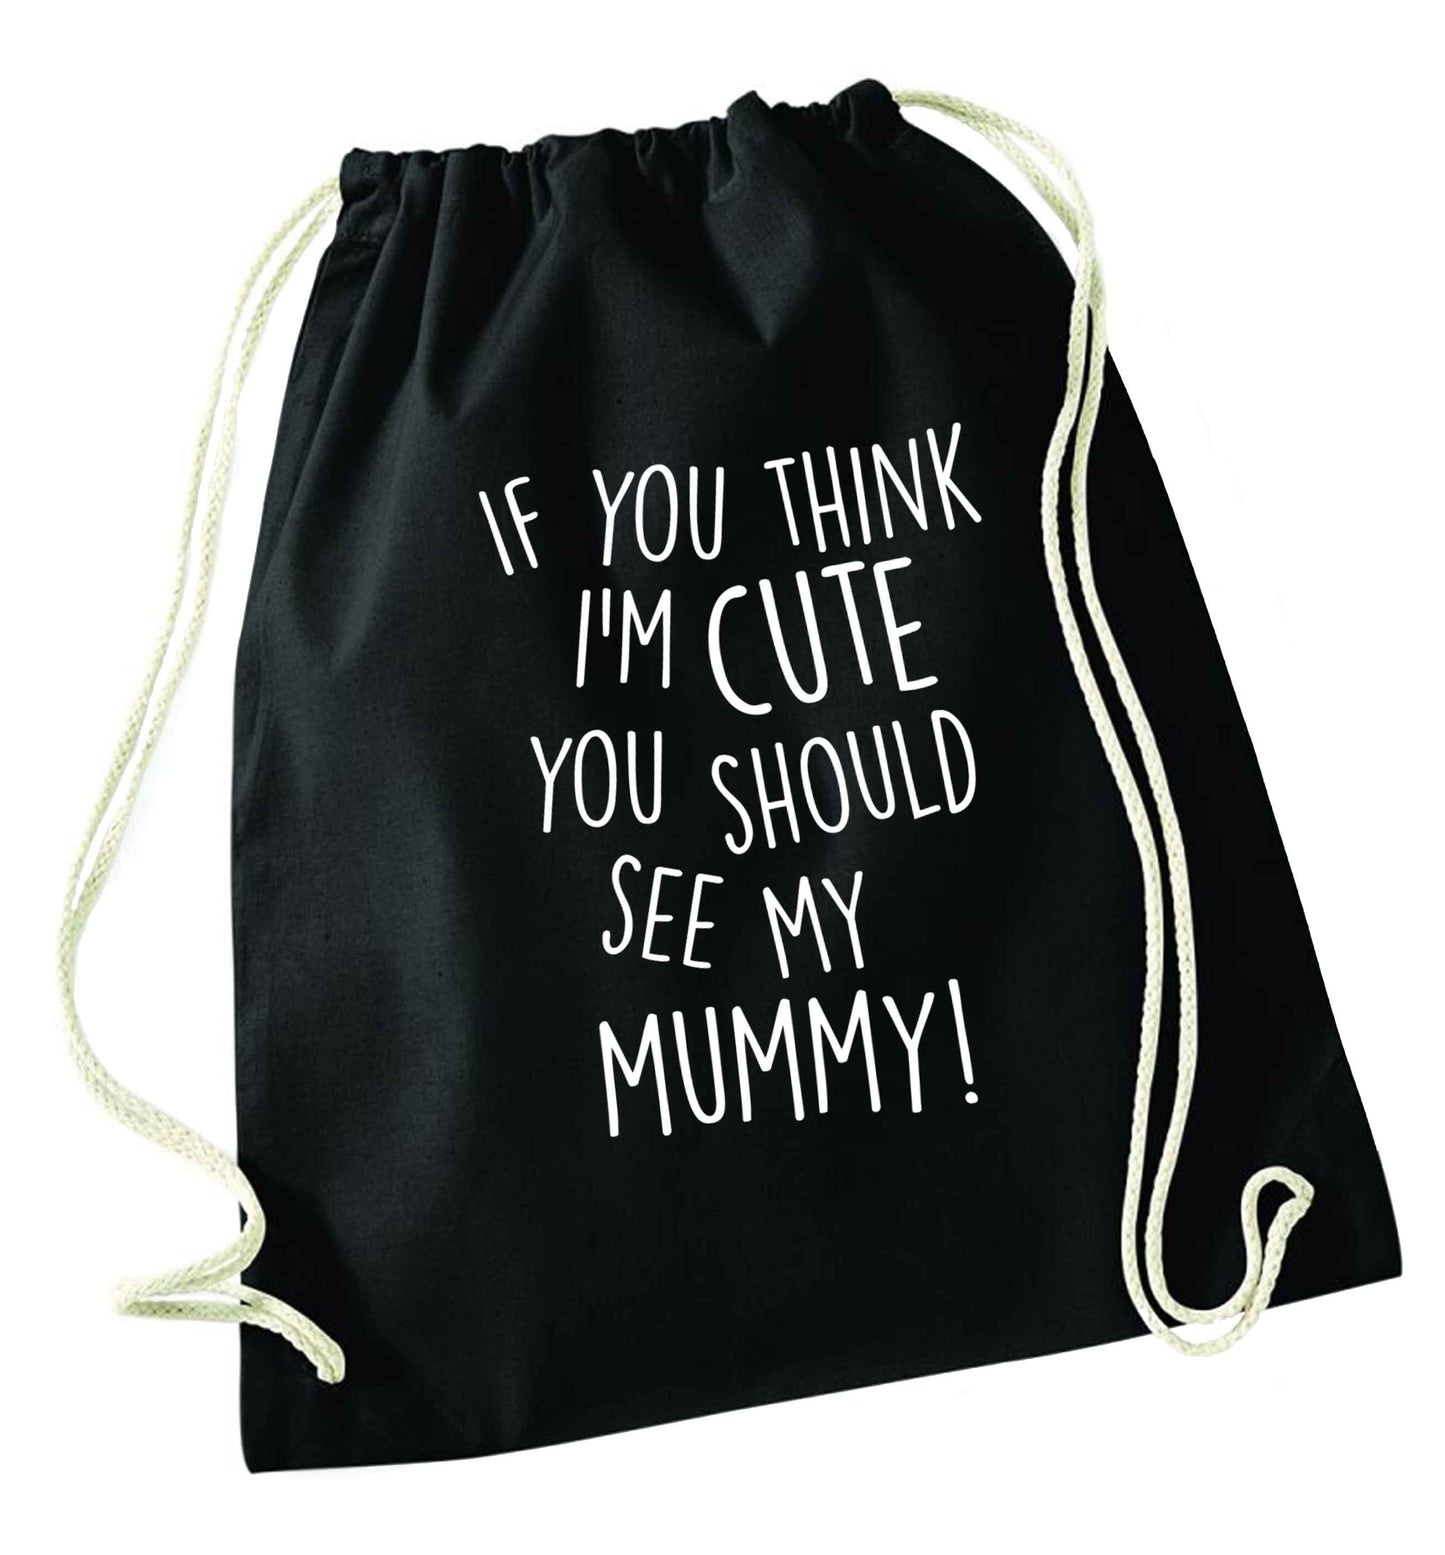 My favourite people call me mummy black drawstring bag